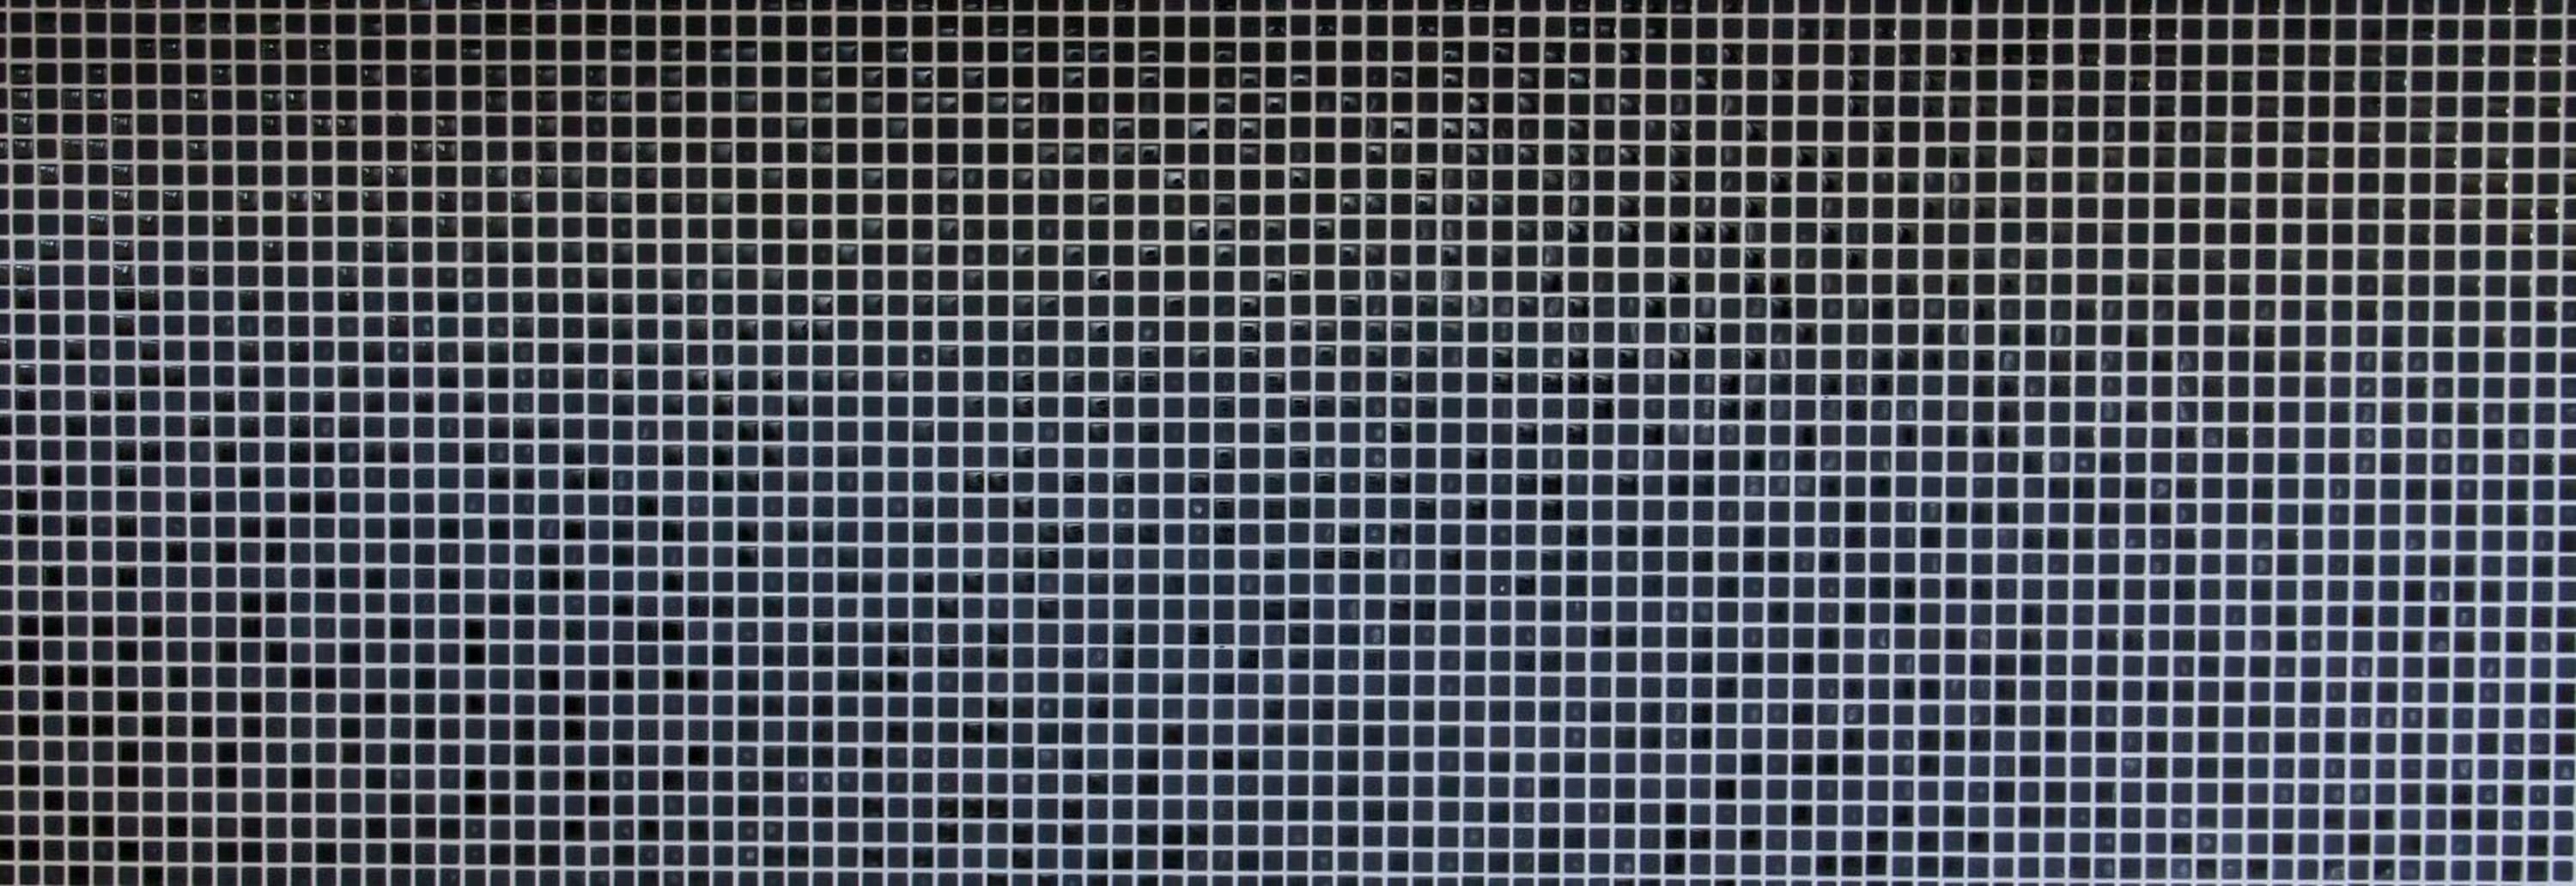 Mosani Mosaikfliesen matt Glasmosaik schwarz Recycling 10 Mosaikfliesen / Mosaikmatten